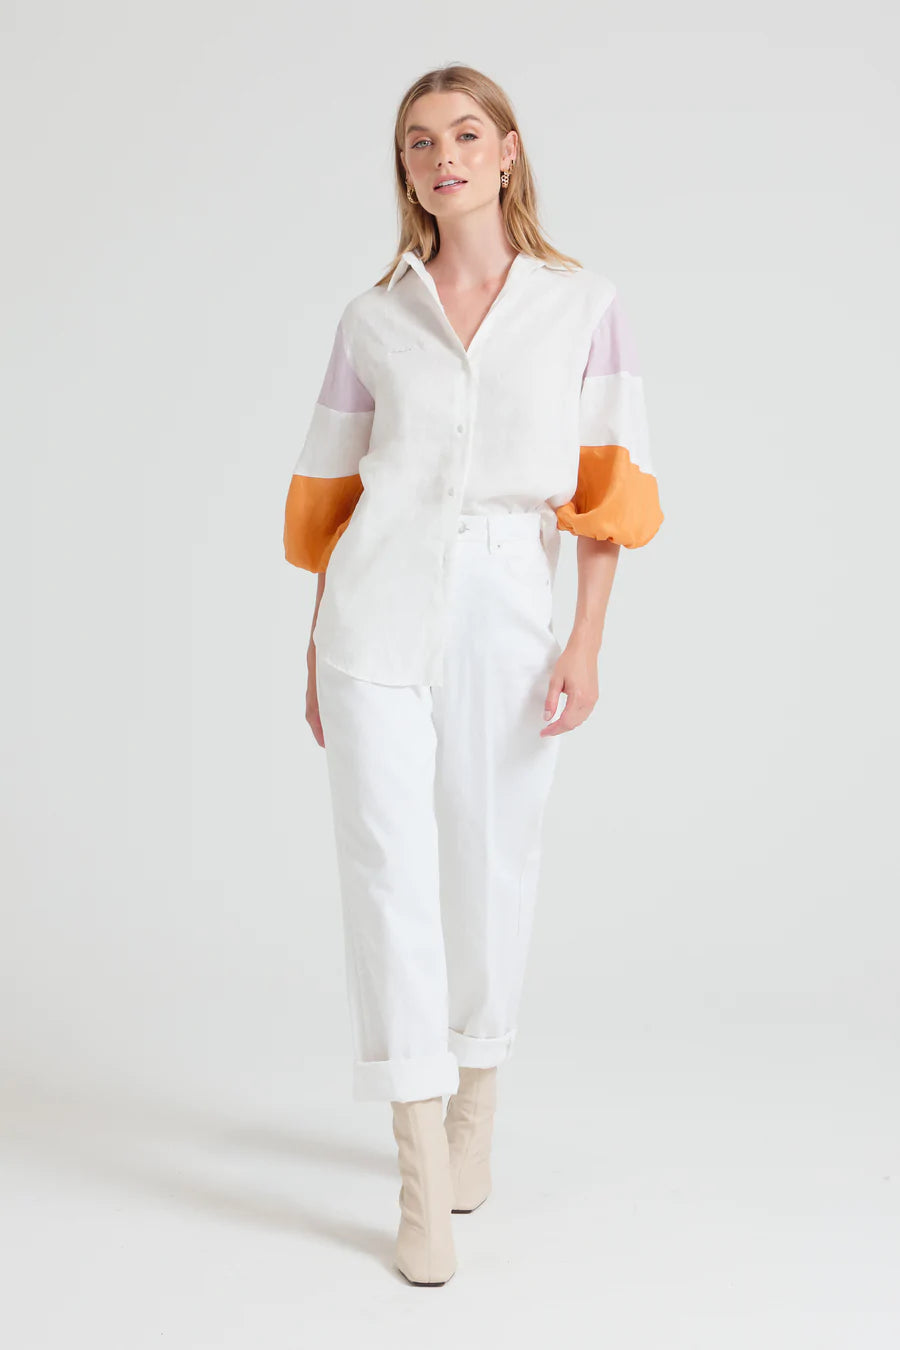 Apero - Loli Linen Button Up Shirt - White / Orange / Lilac